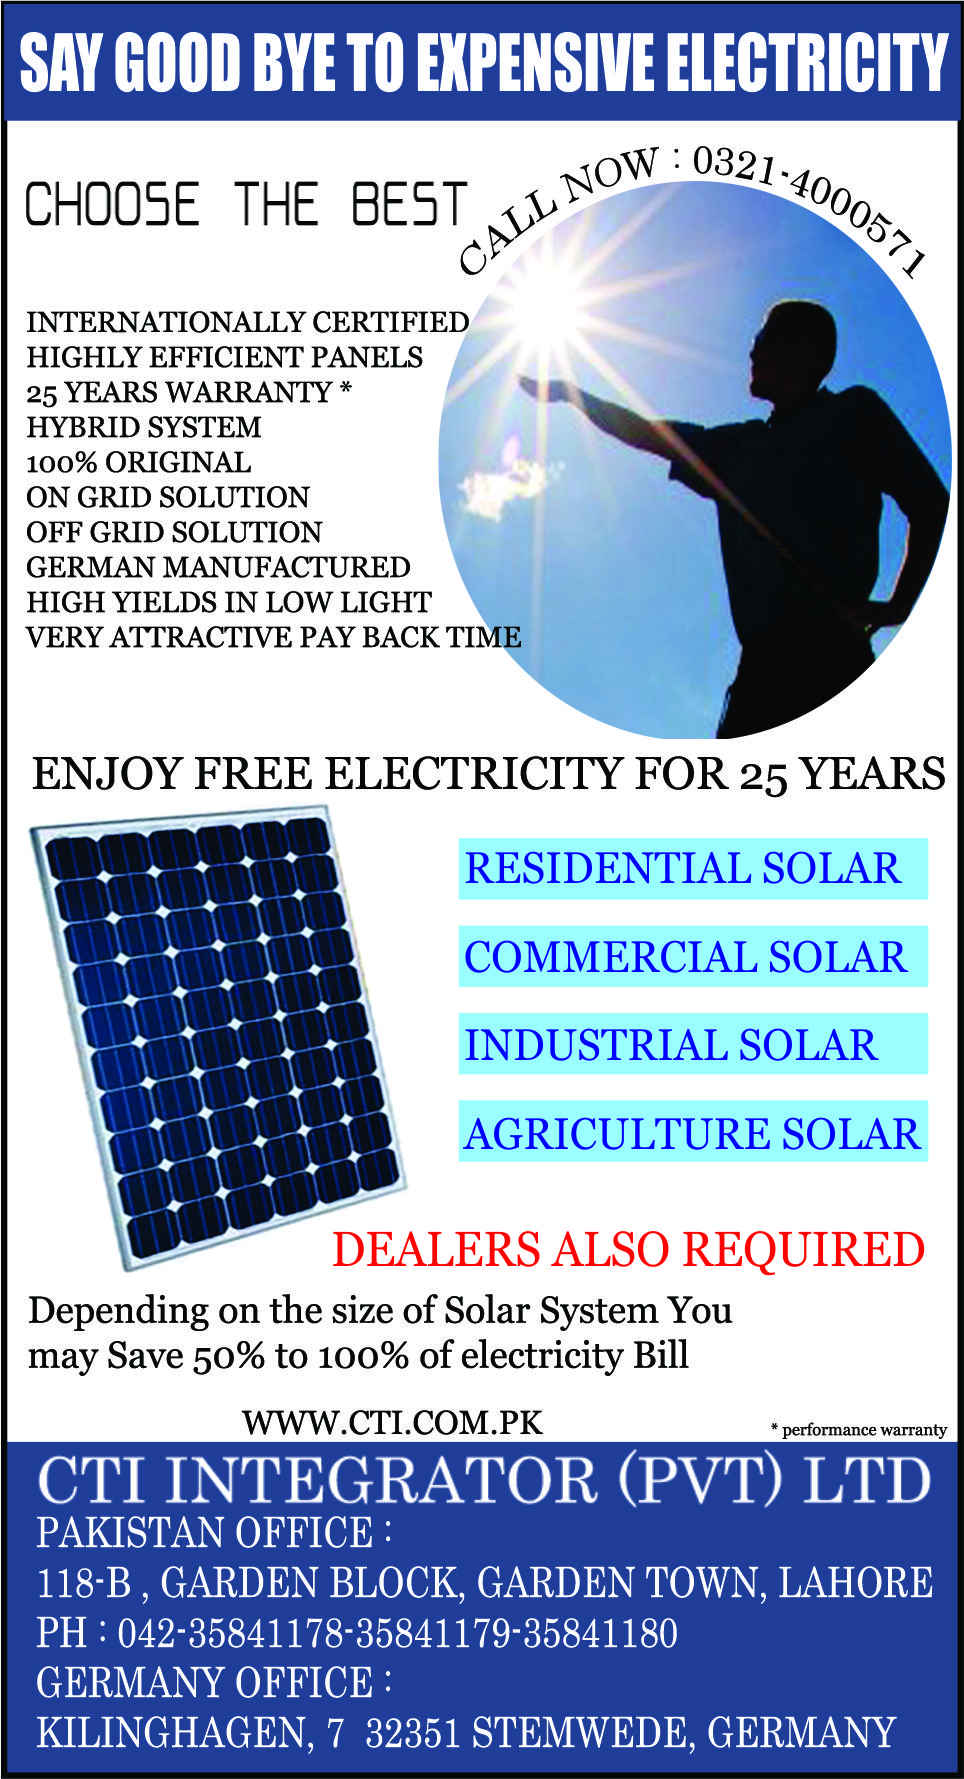 Solar in Pakistan